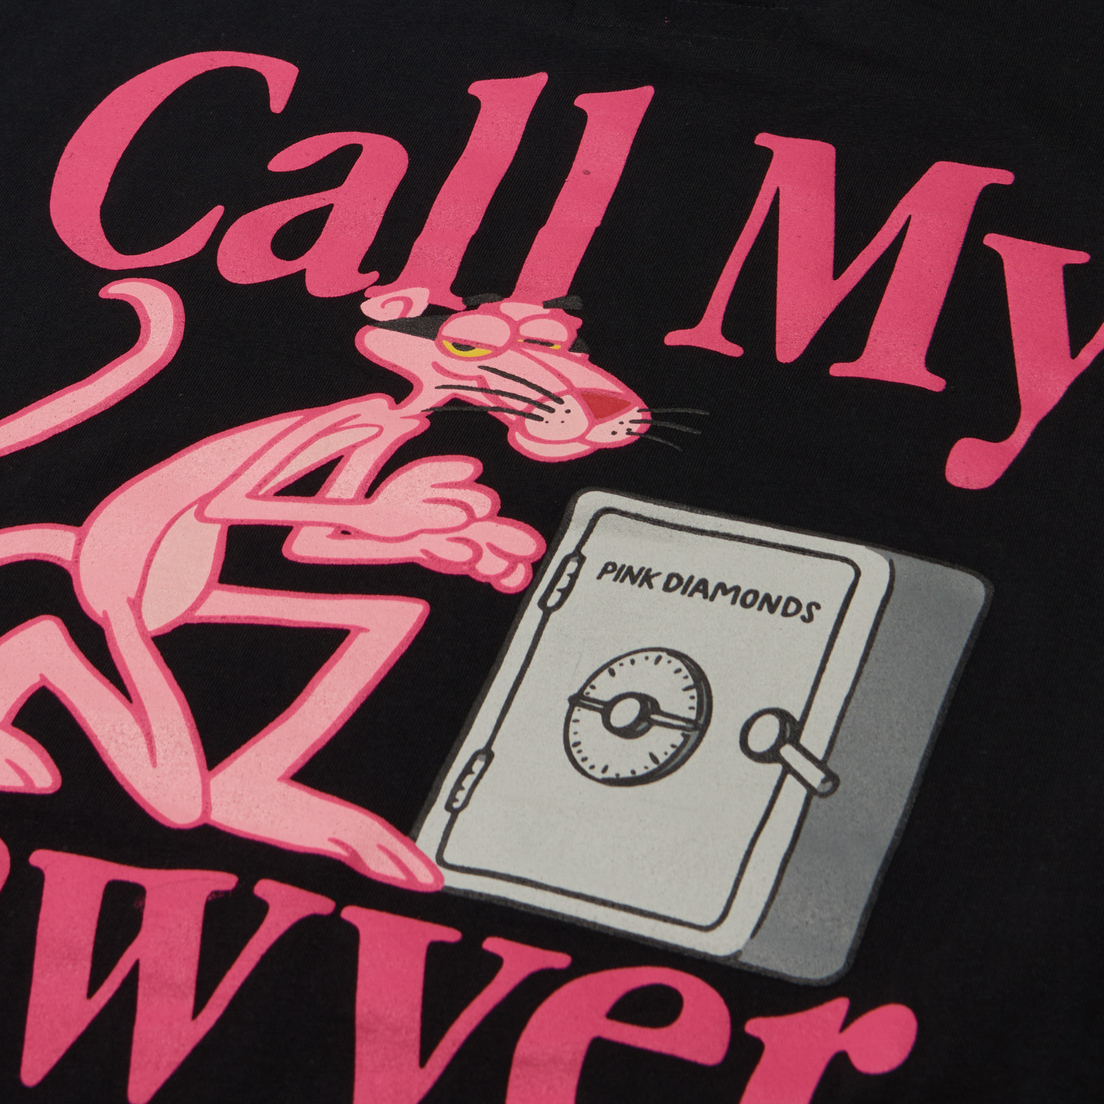 MARKET Мужская футболка x Pink Panther Call My Lawyer